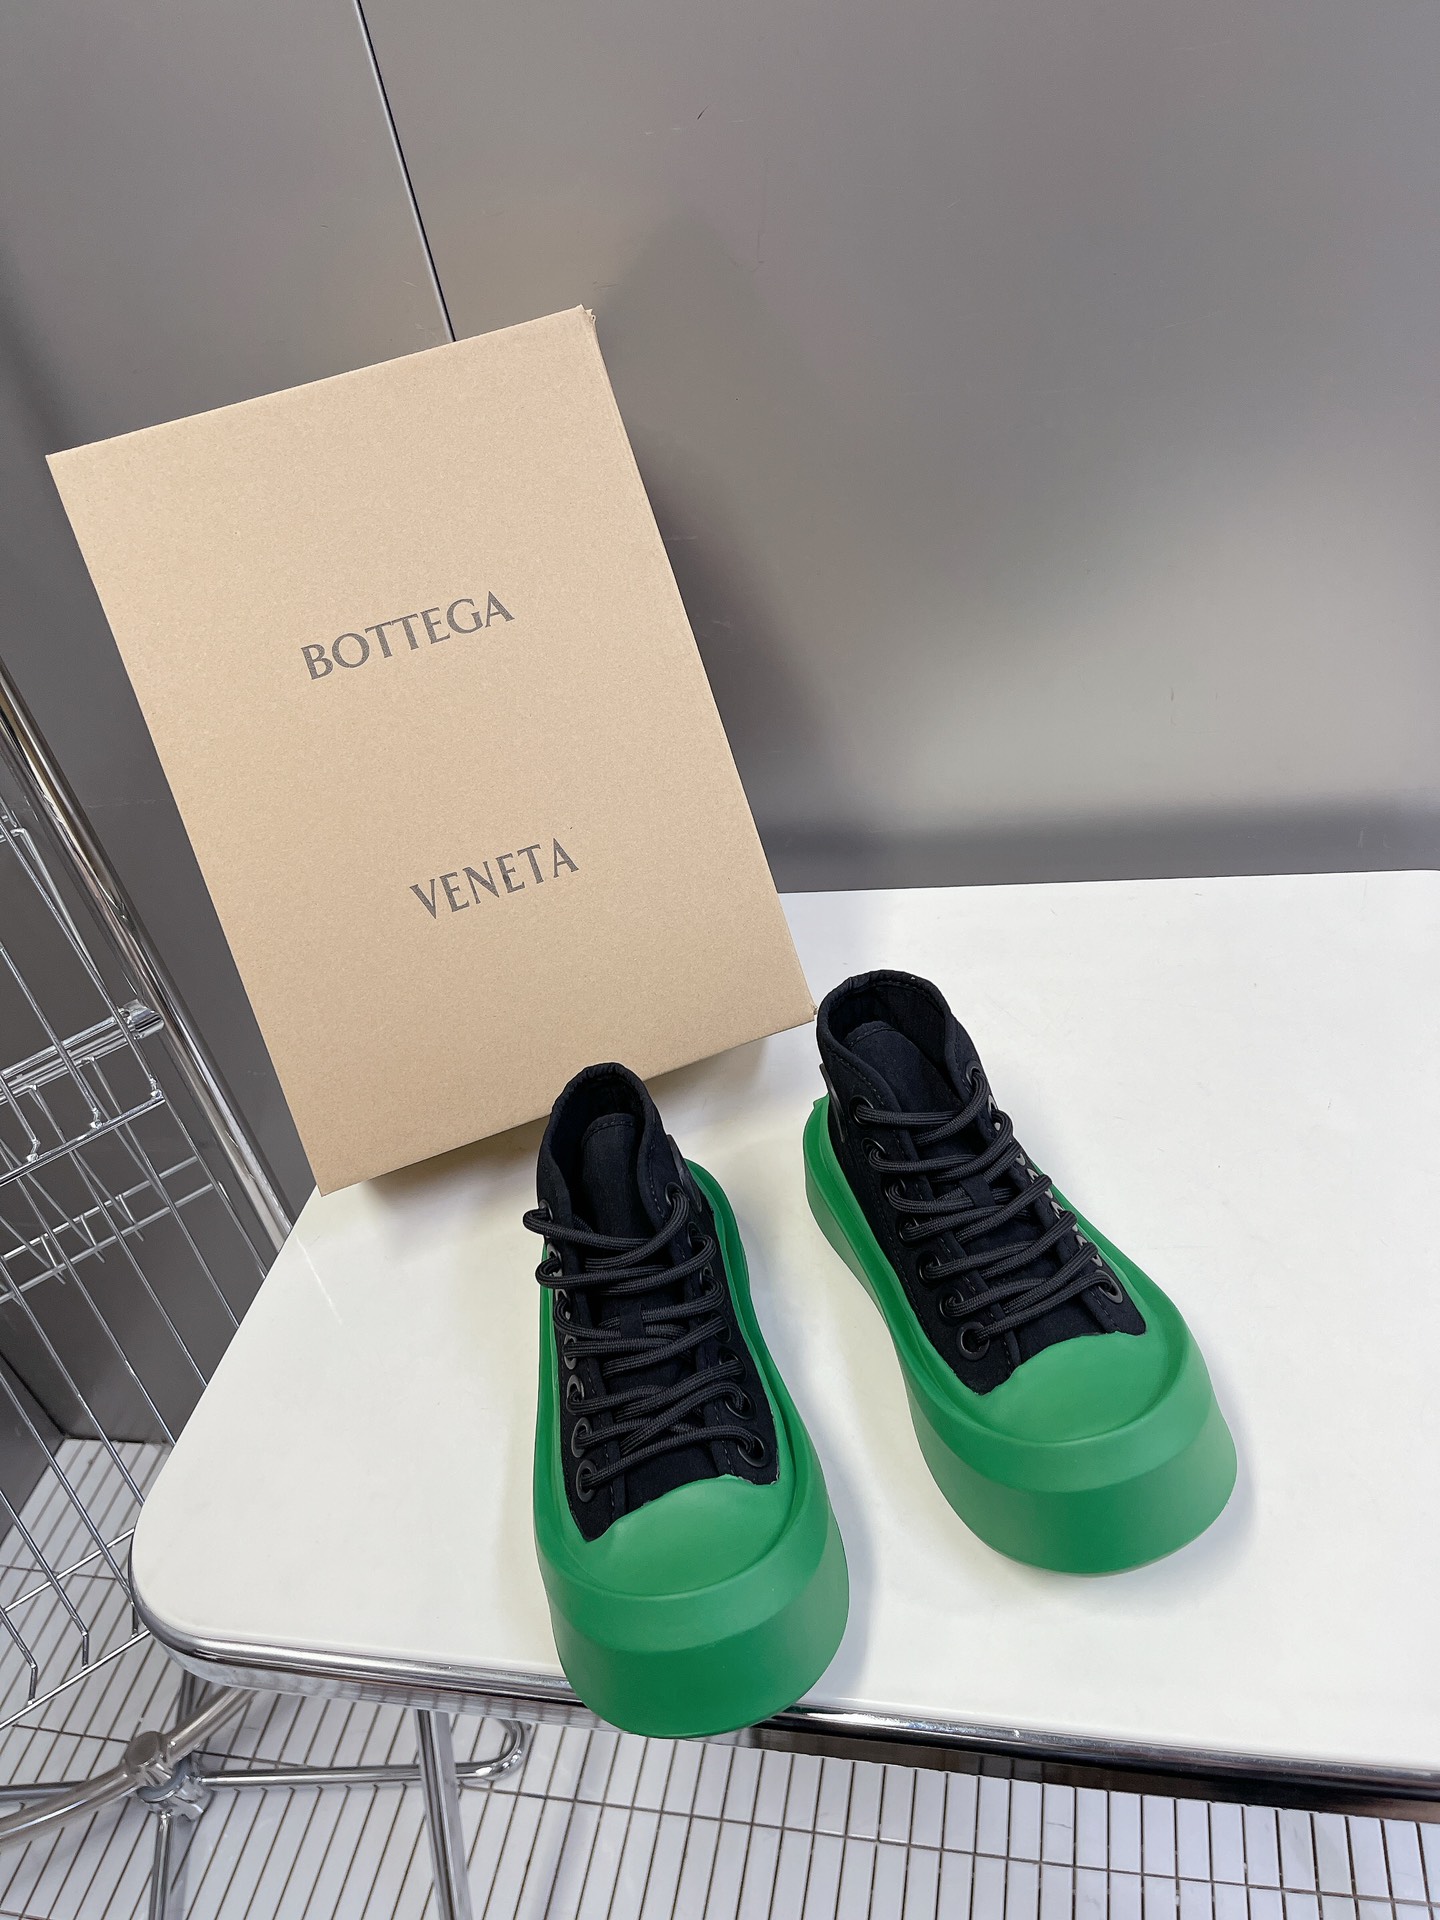 Bottega Veneta Shoes Sneakers Unisex Women Men Canvas Nylon Rubber Net Casual